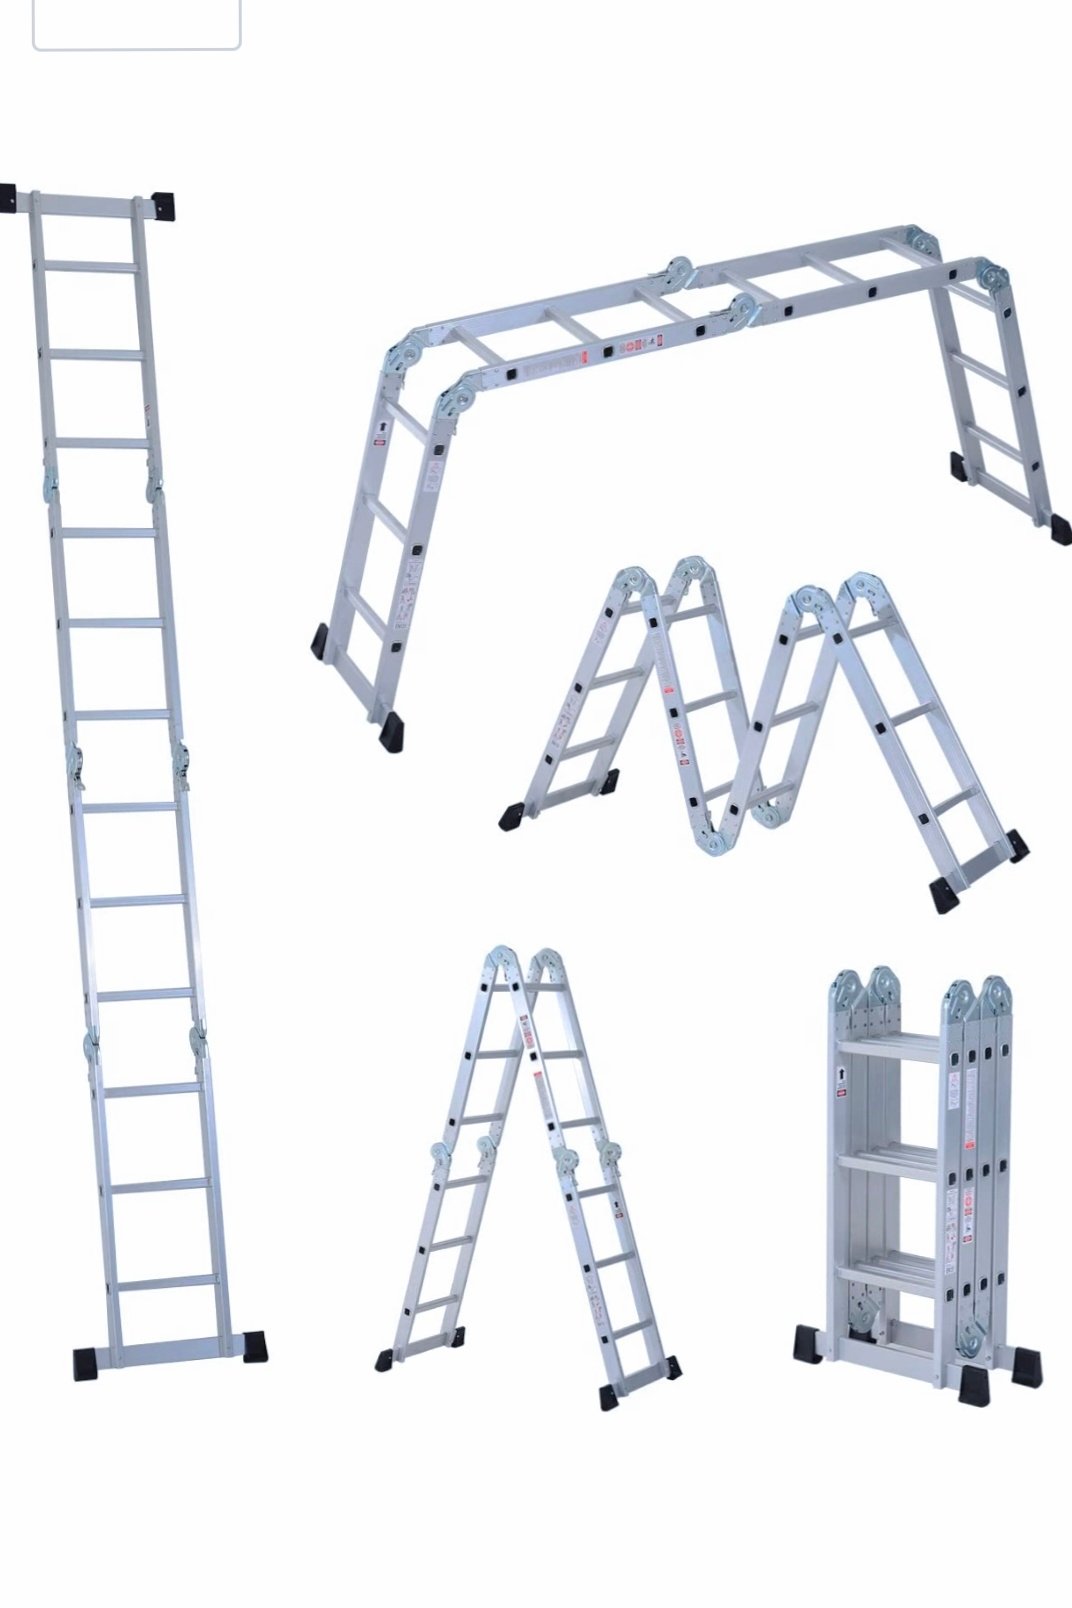 Afstoten Kinderrijmpjes Mens 4 Meter Multi Purpose (Folding type) Ladder - modern